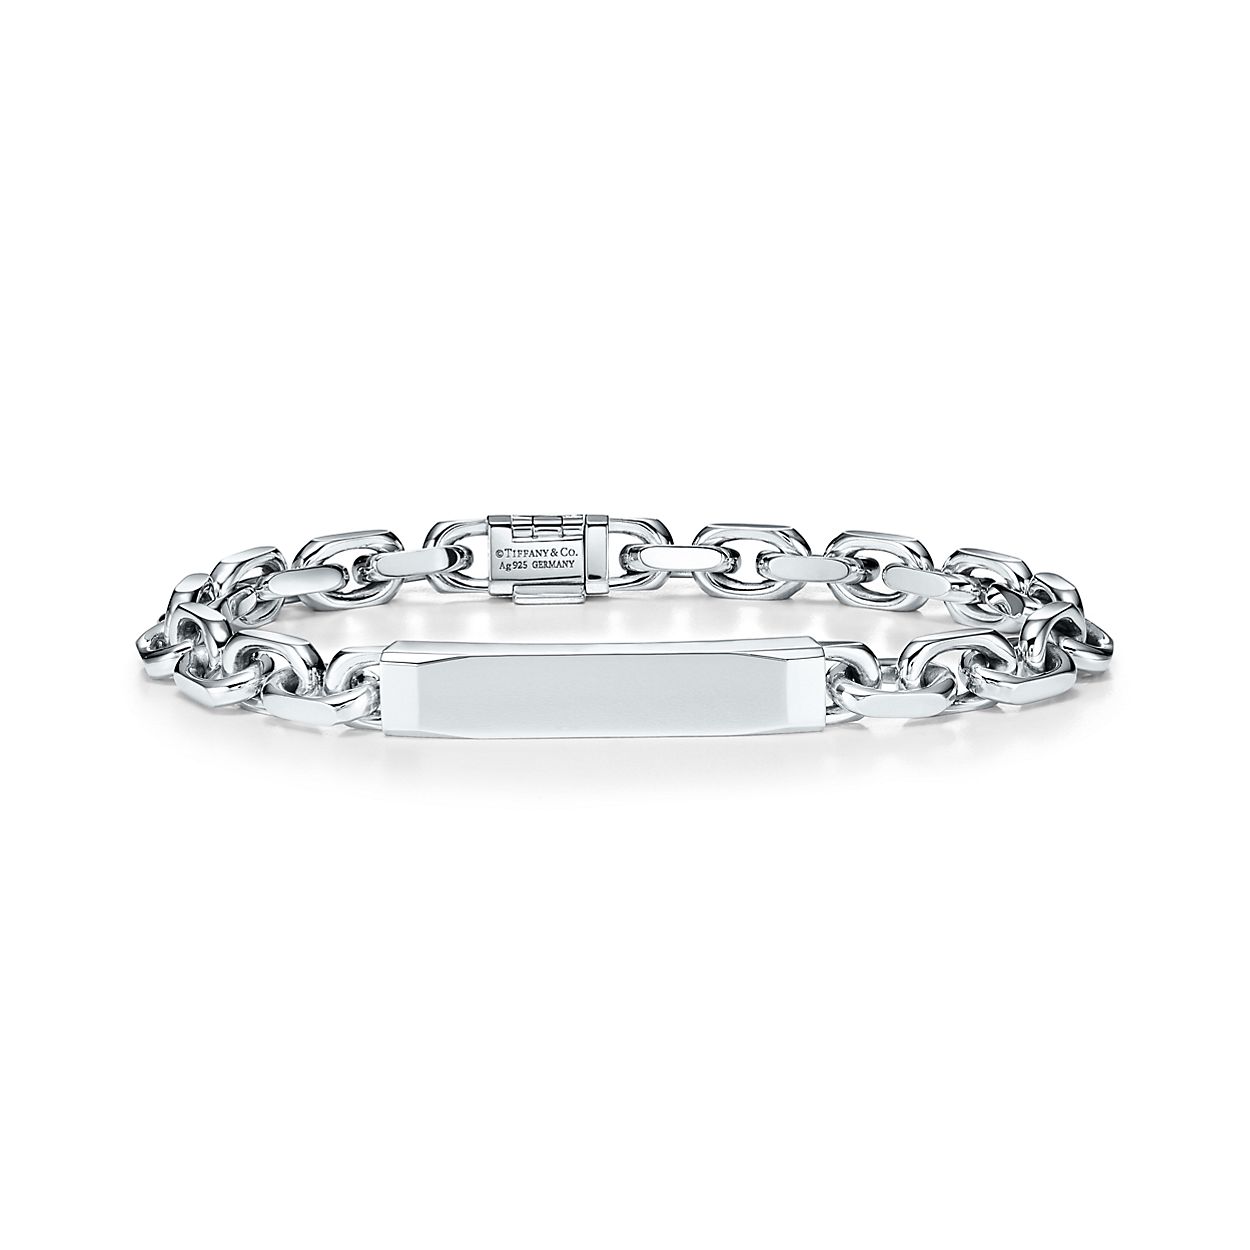 Tiffany 17 Makers I D Chain Bracelet In Sterling Silver Medium Tiffany Co